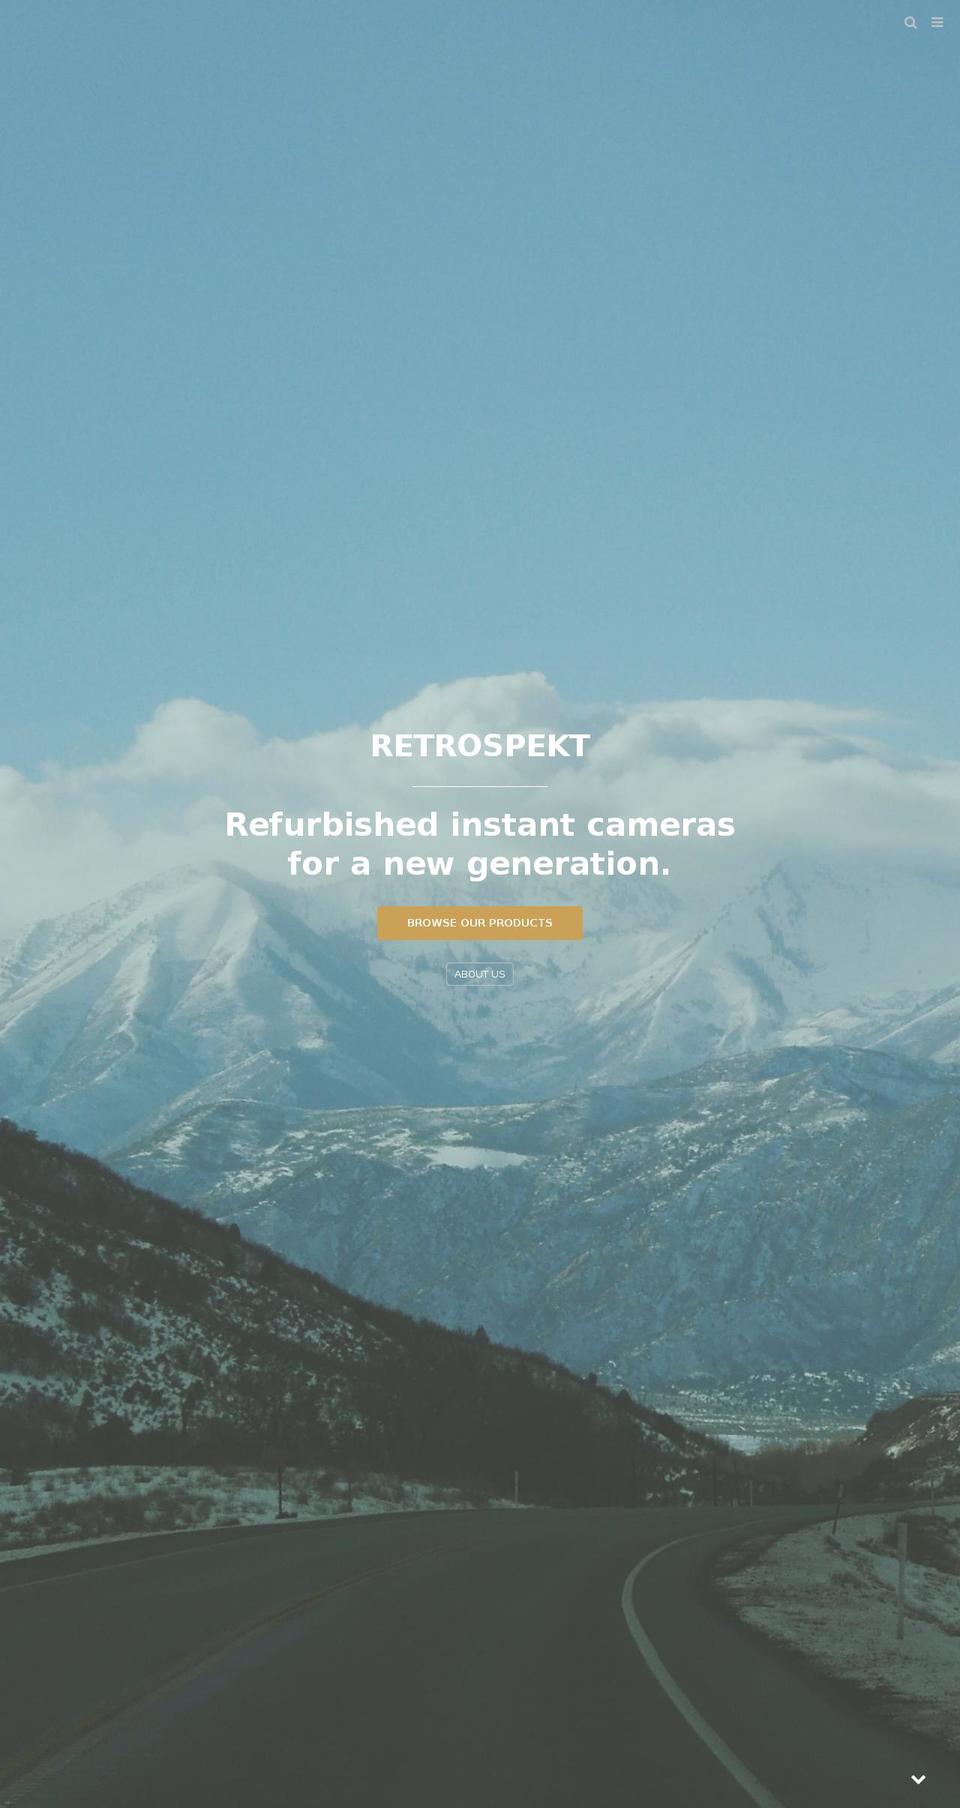 retrospekt.info shopify website screenshot